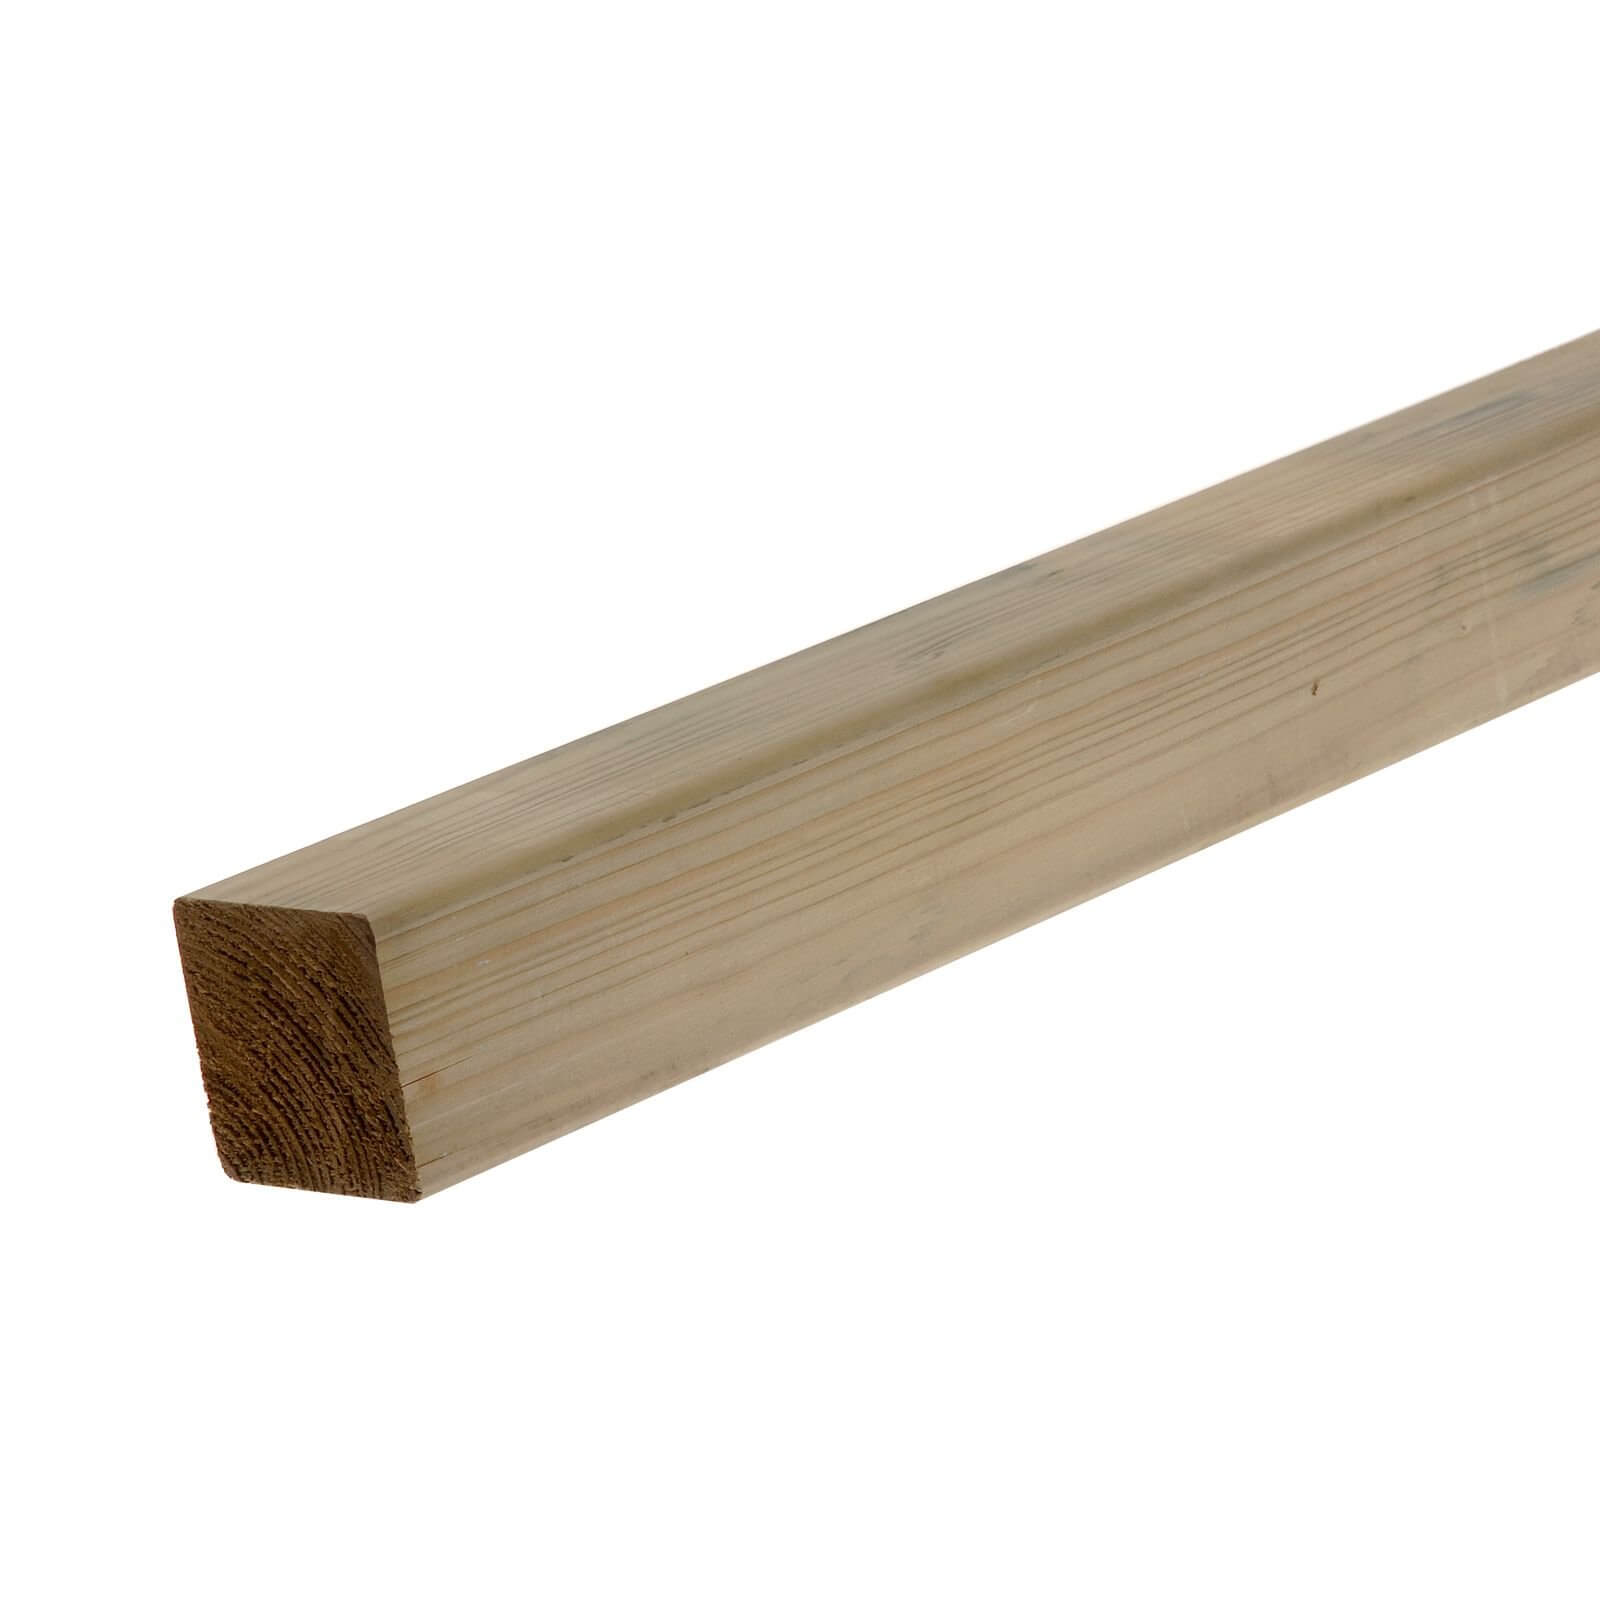 Metsa Sawn Planed Stick Softwood Timber R4C 2.4m (46 x 46 x 2400mm)